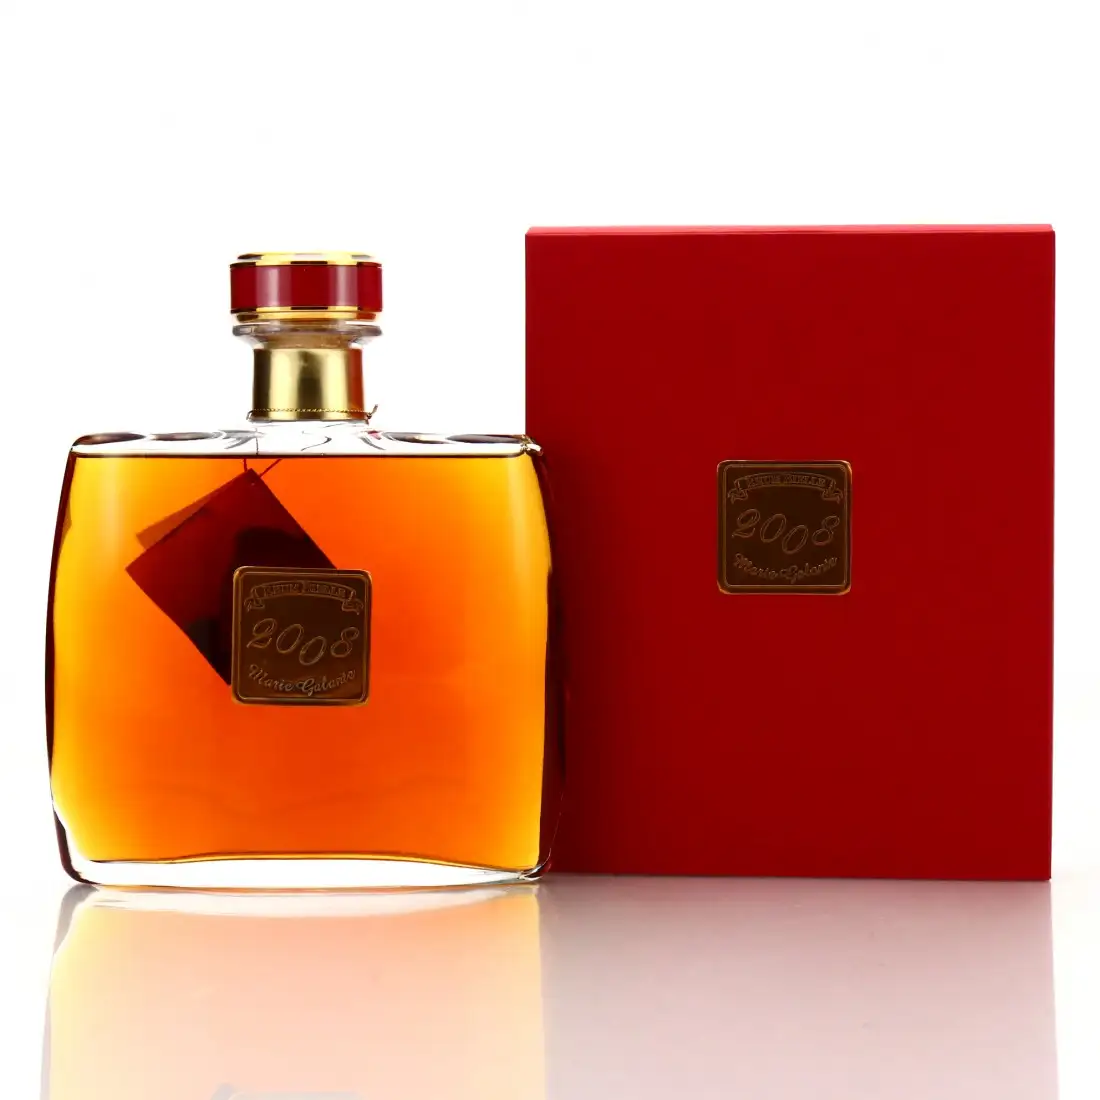 Image of the front of the bottle of the rum Brut de fût